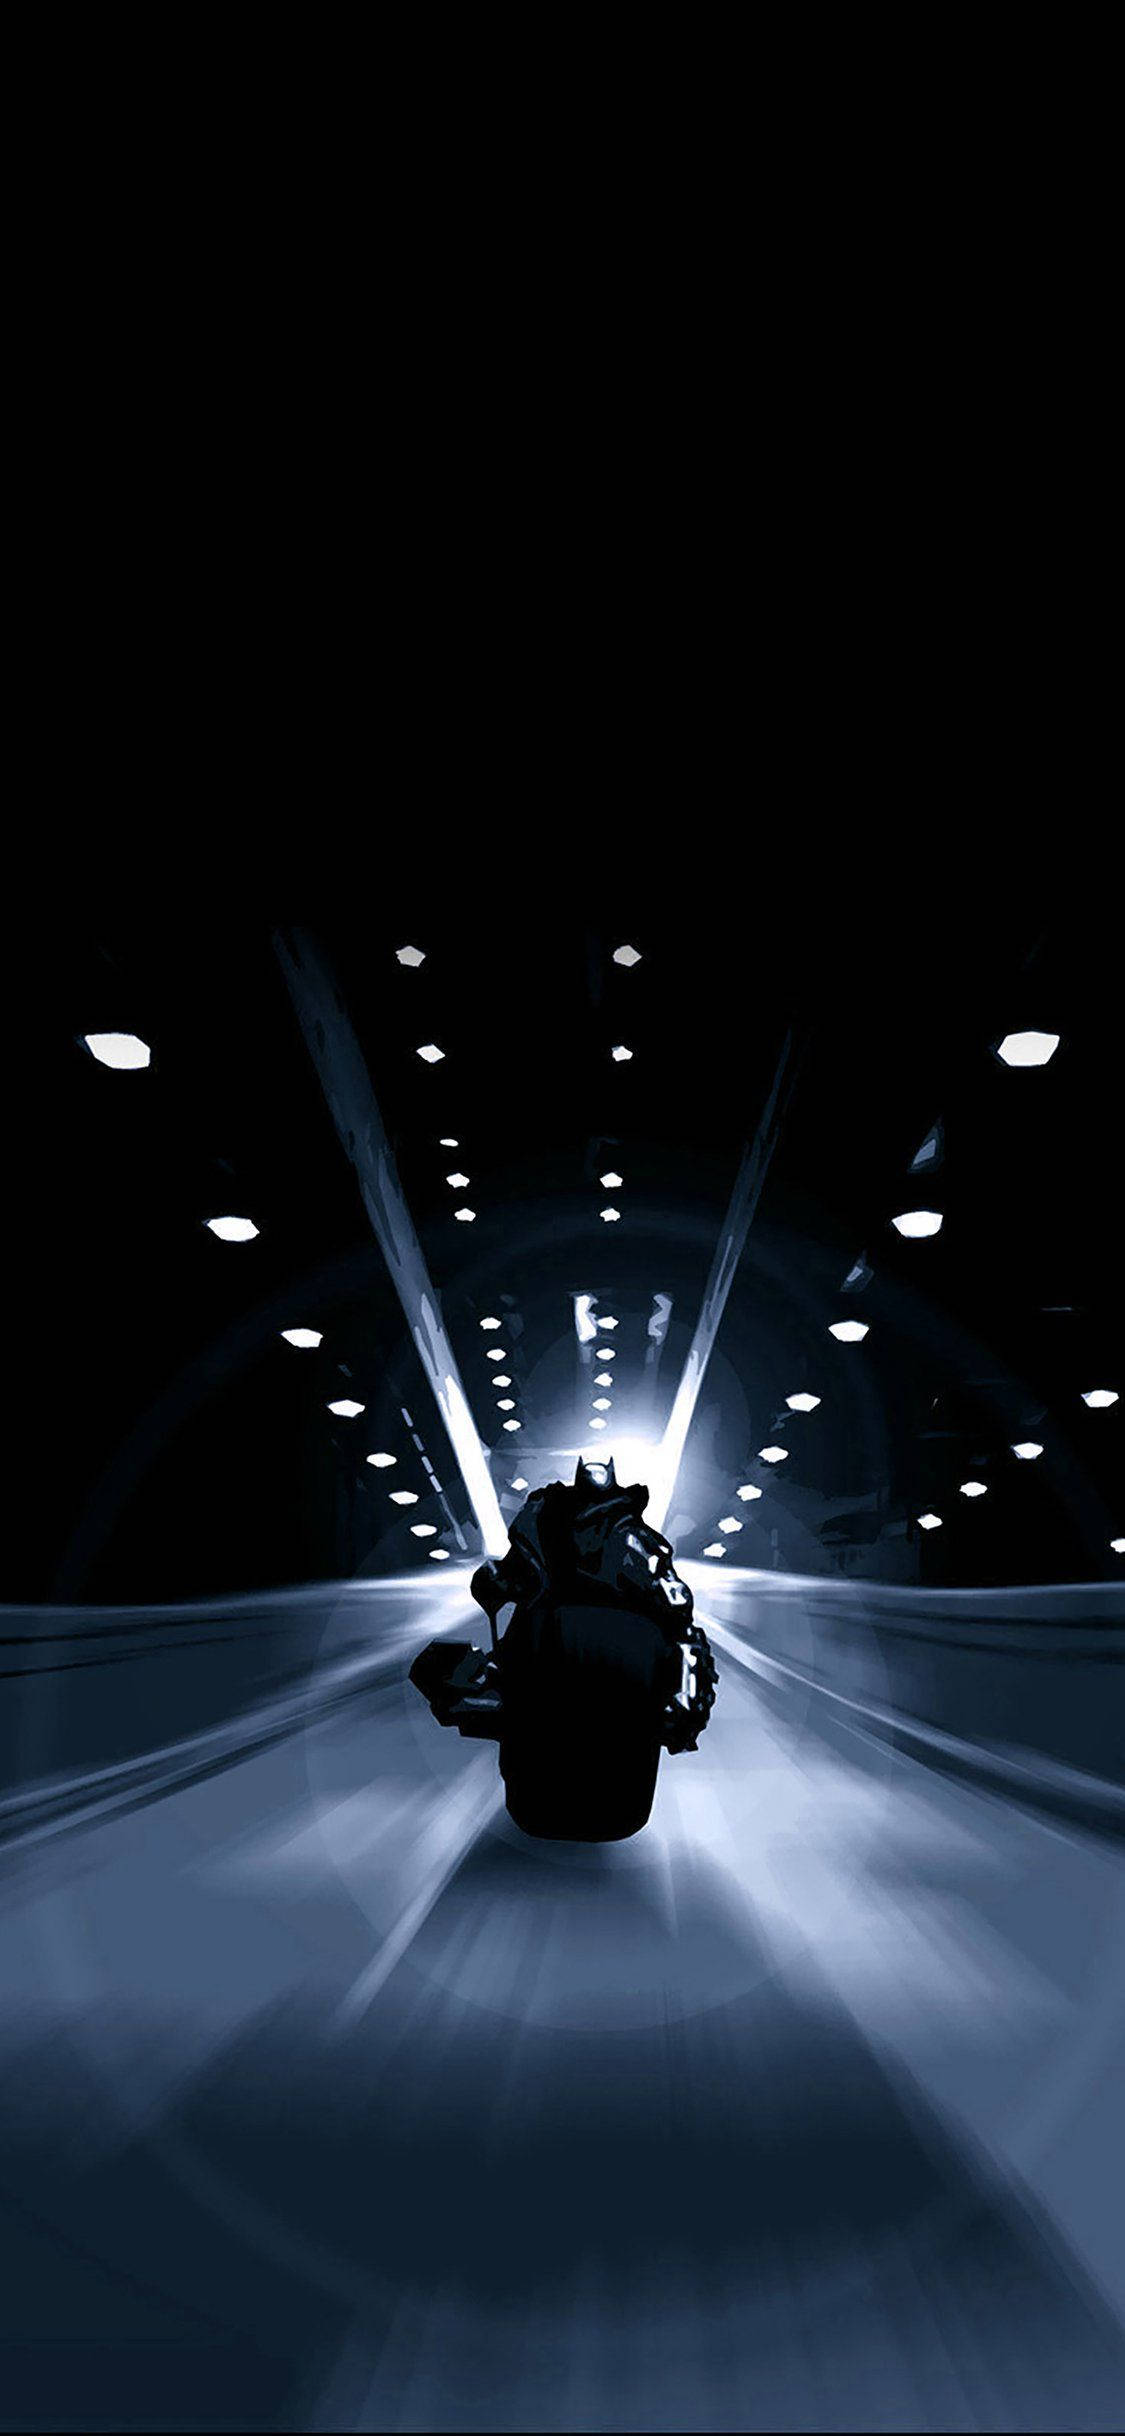 Batman Driving A Motorcycle iPhone X Wallpaper